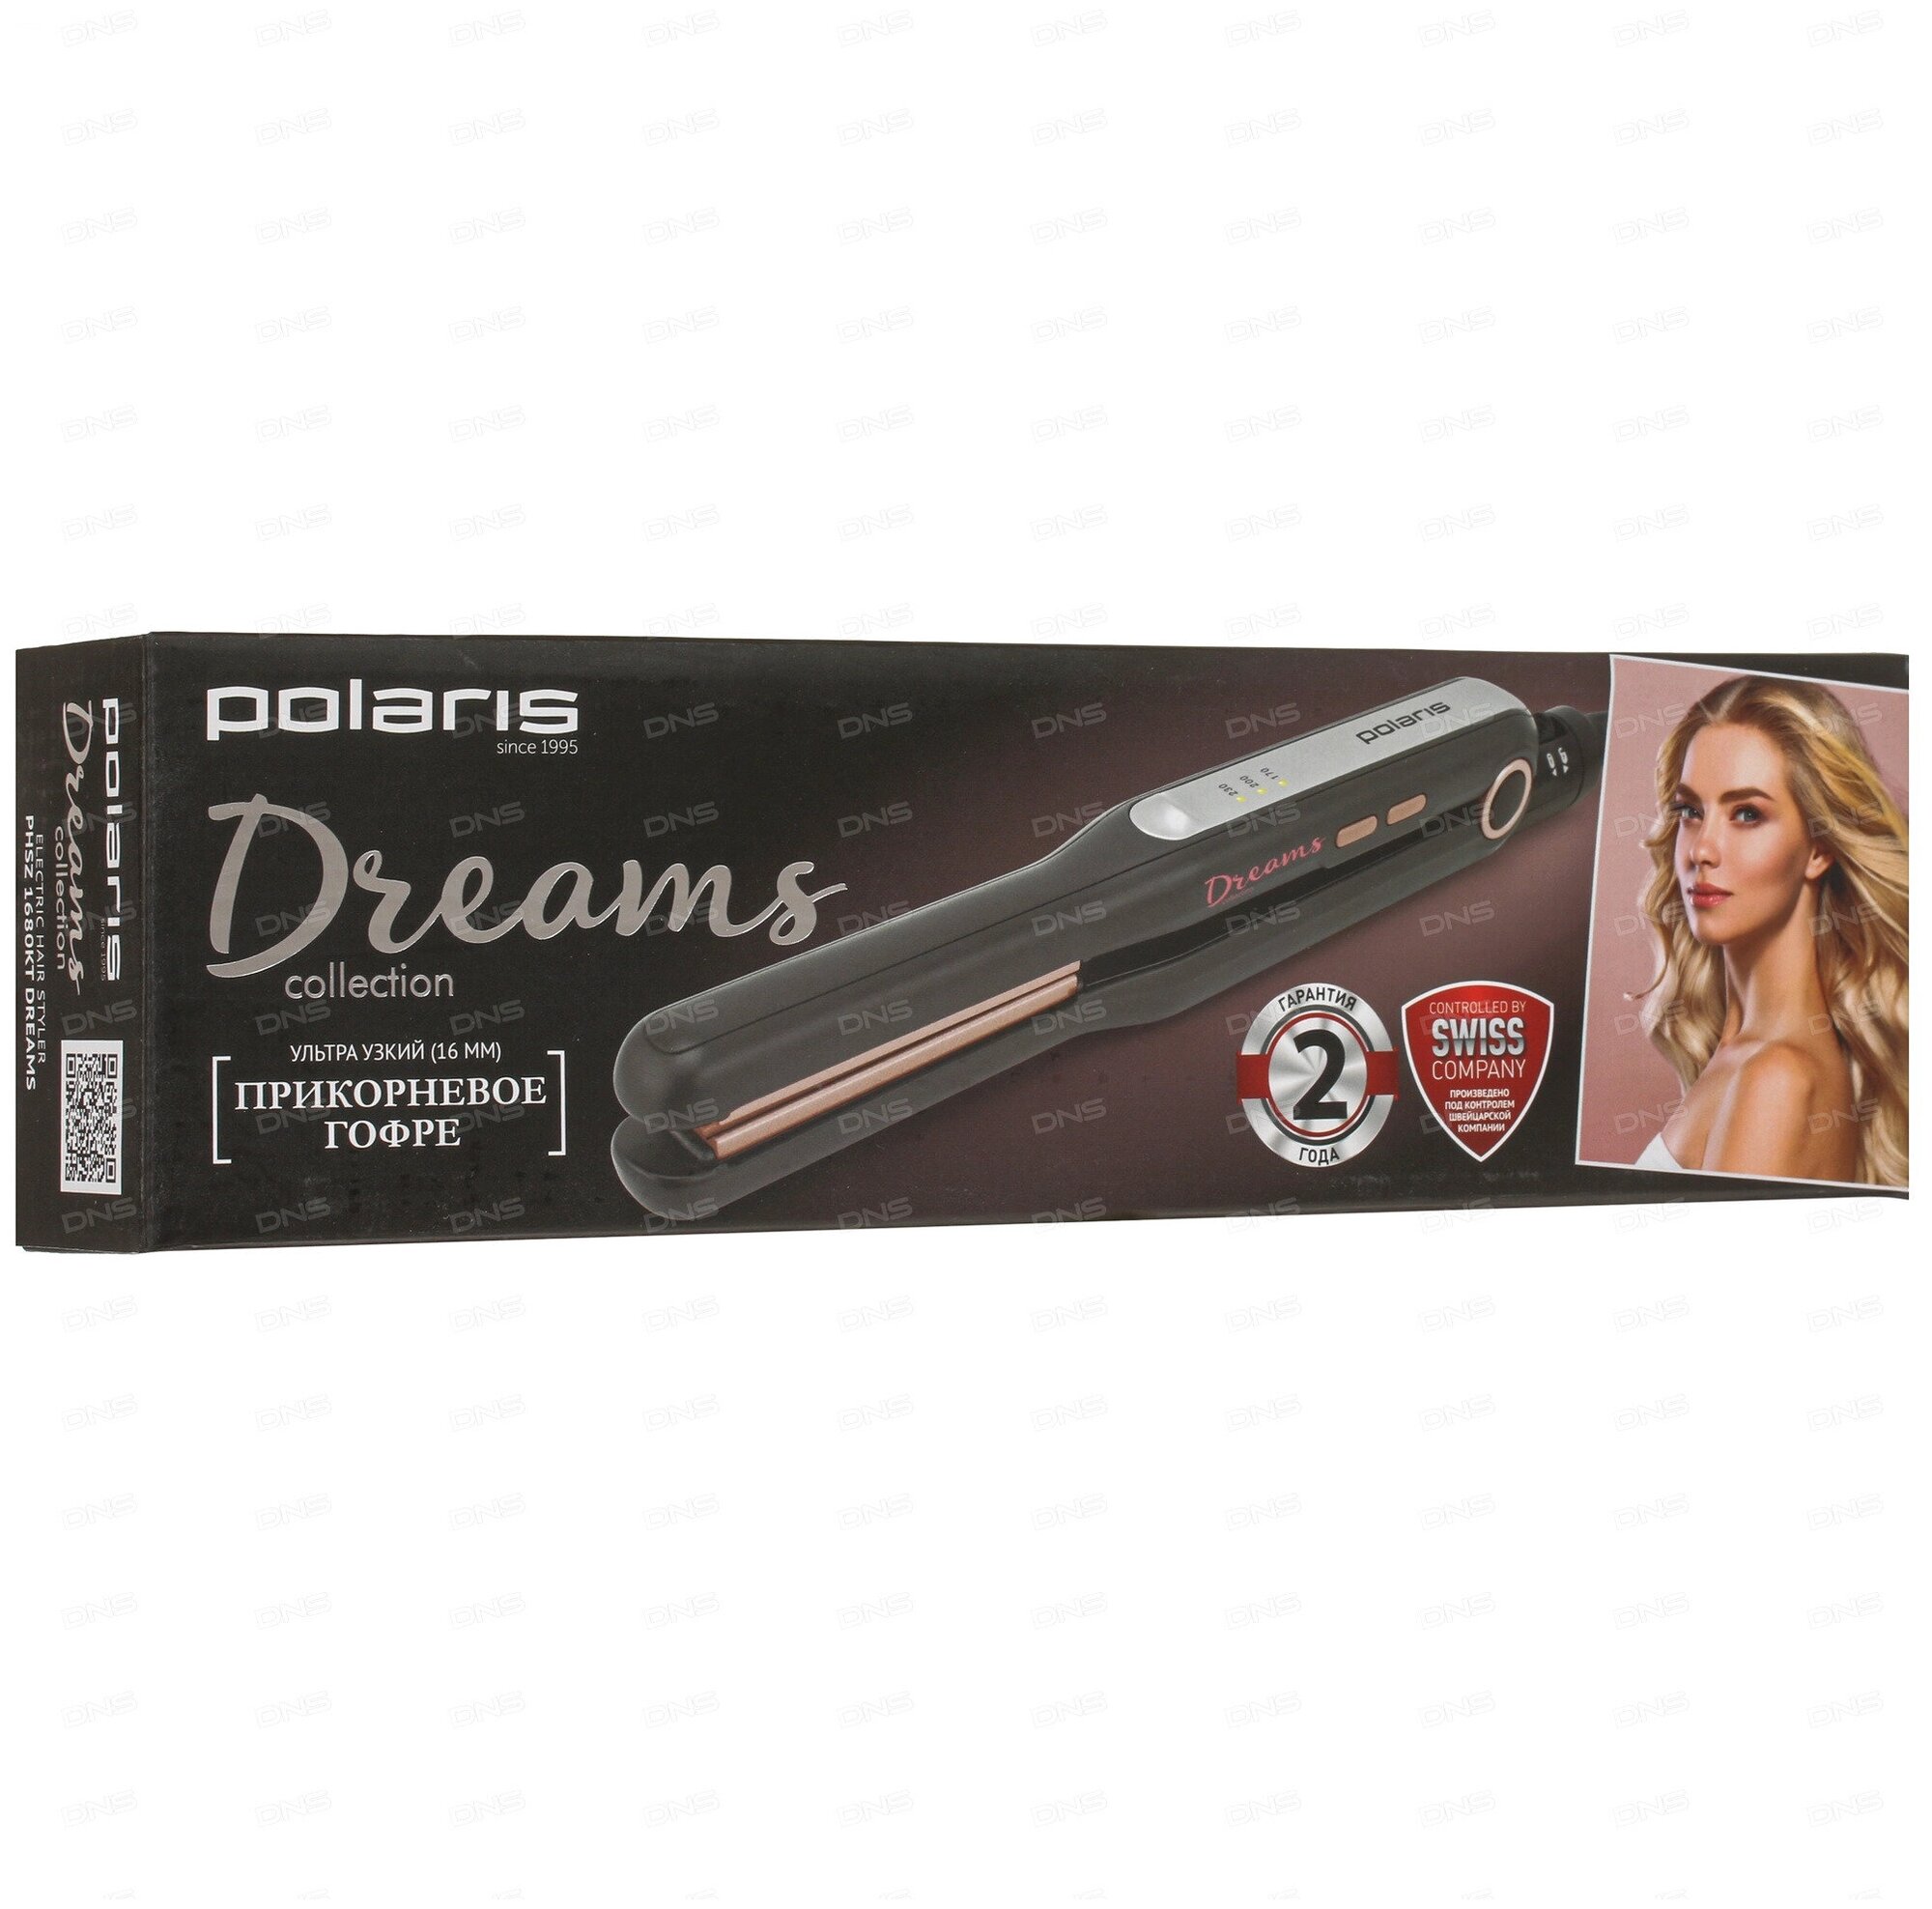 Стайлер для волос Polaris PHSZ 1680KT Dreams, 32 Вт